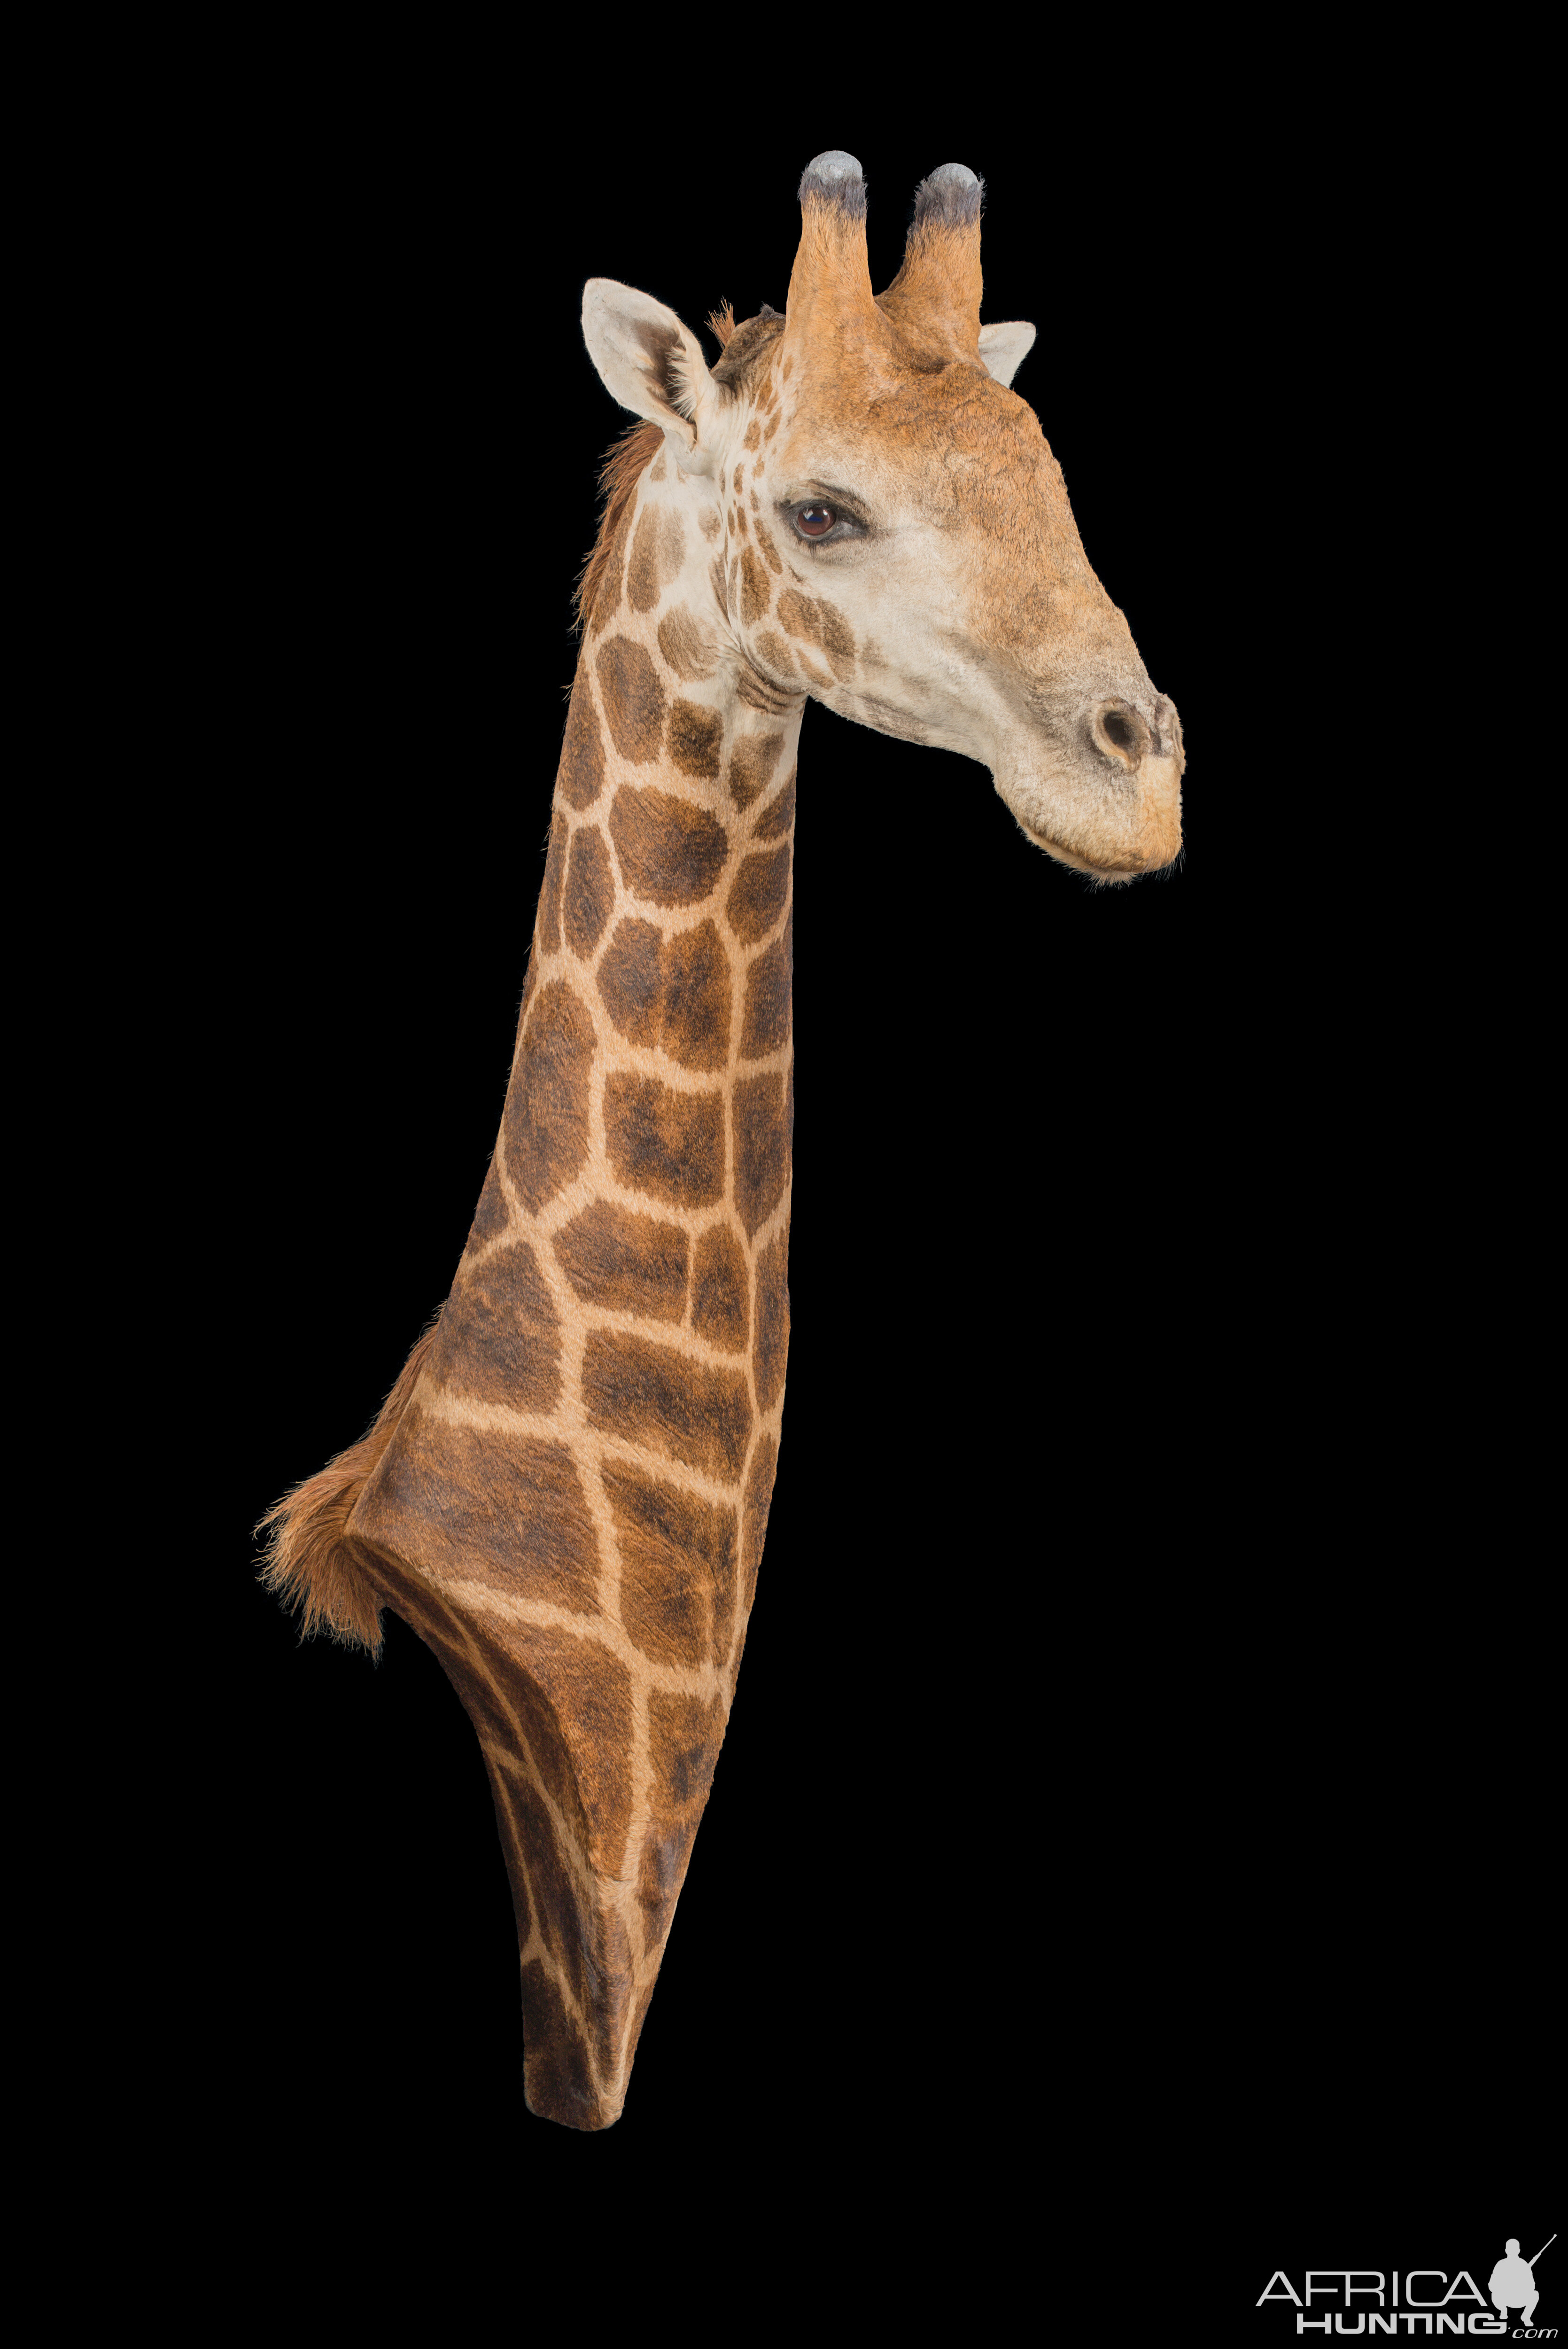 Giraffe Neckmount Taxidermy